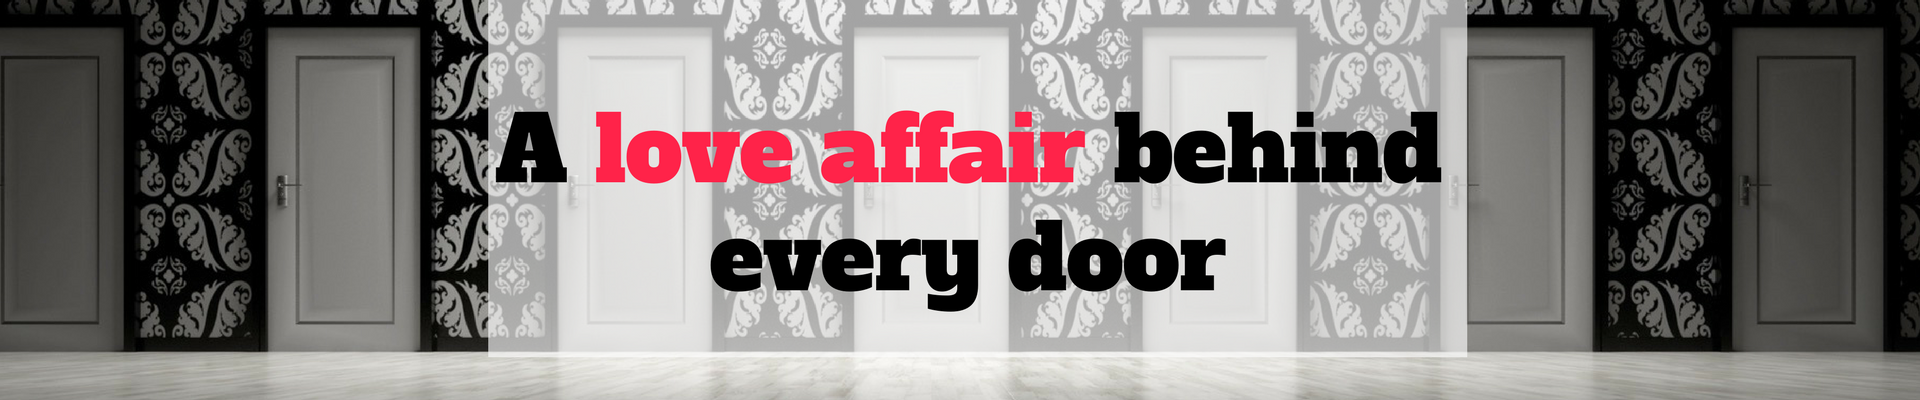 AA every door - not tag